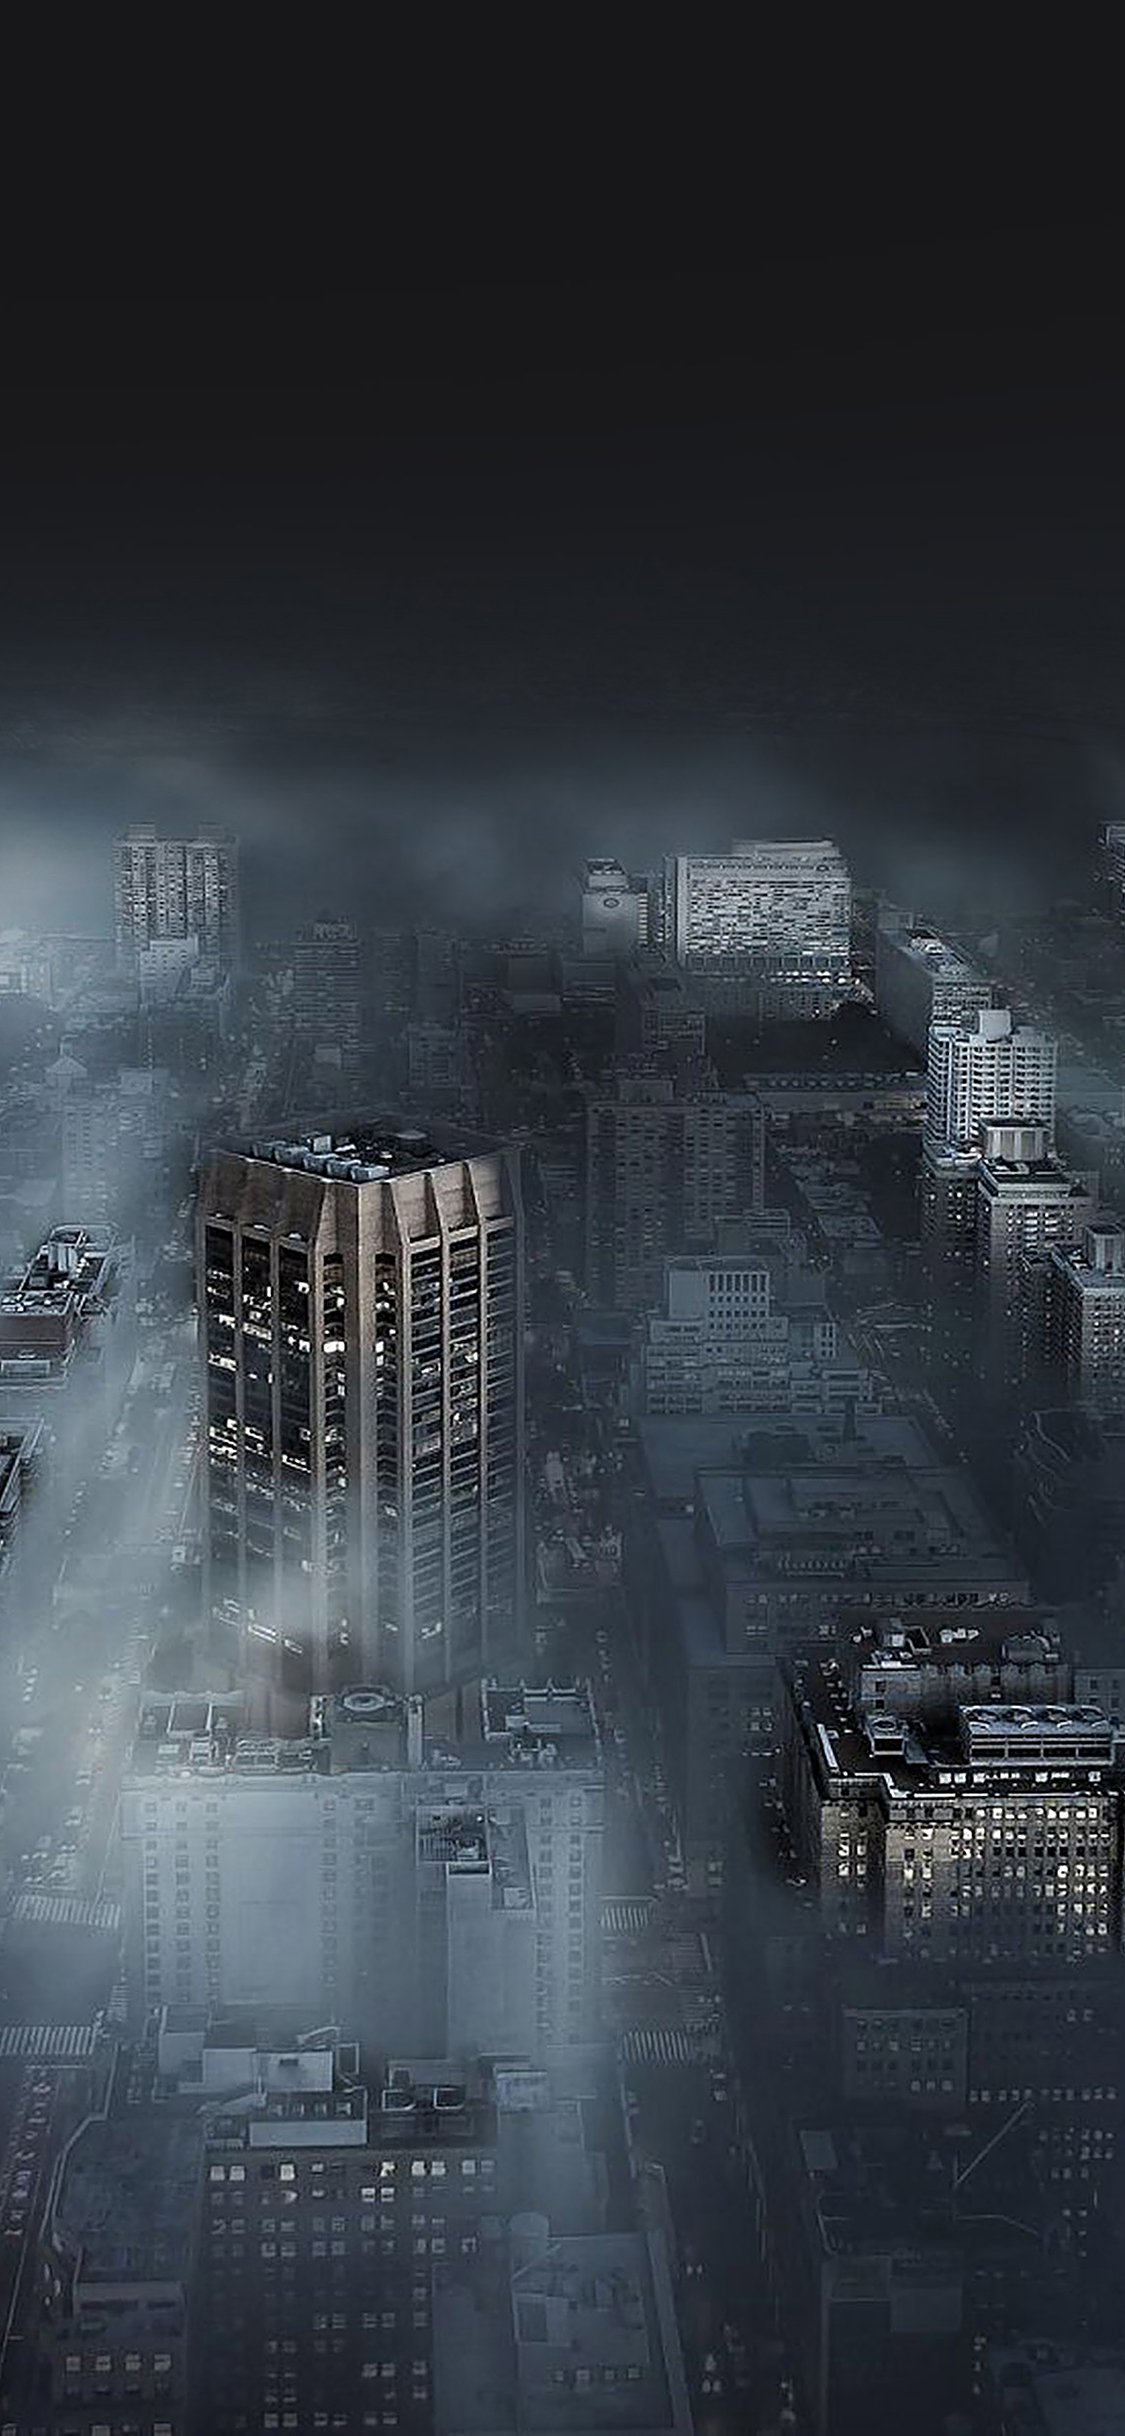 Dark city in fog iPhone wallpaper 